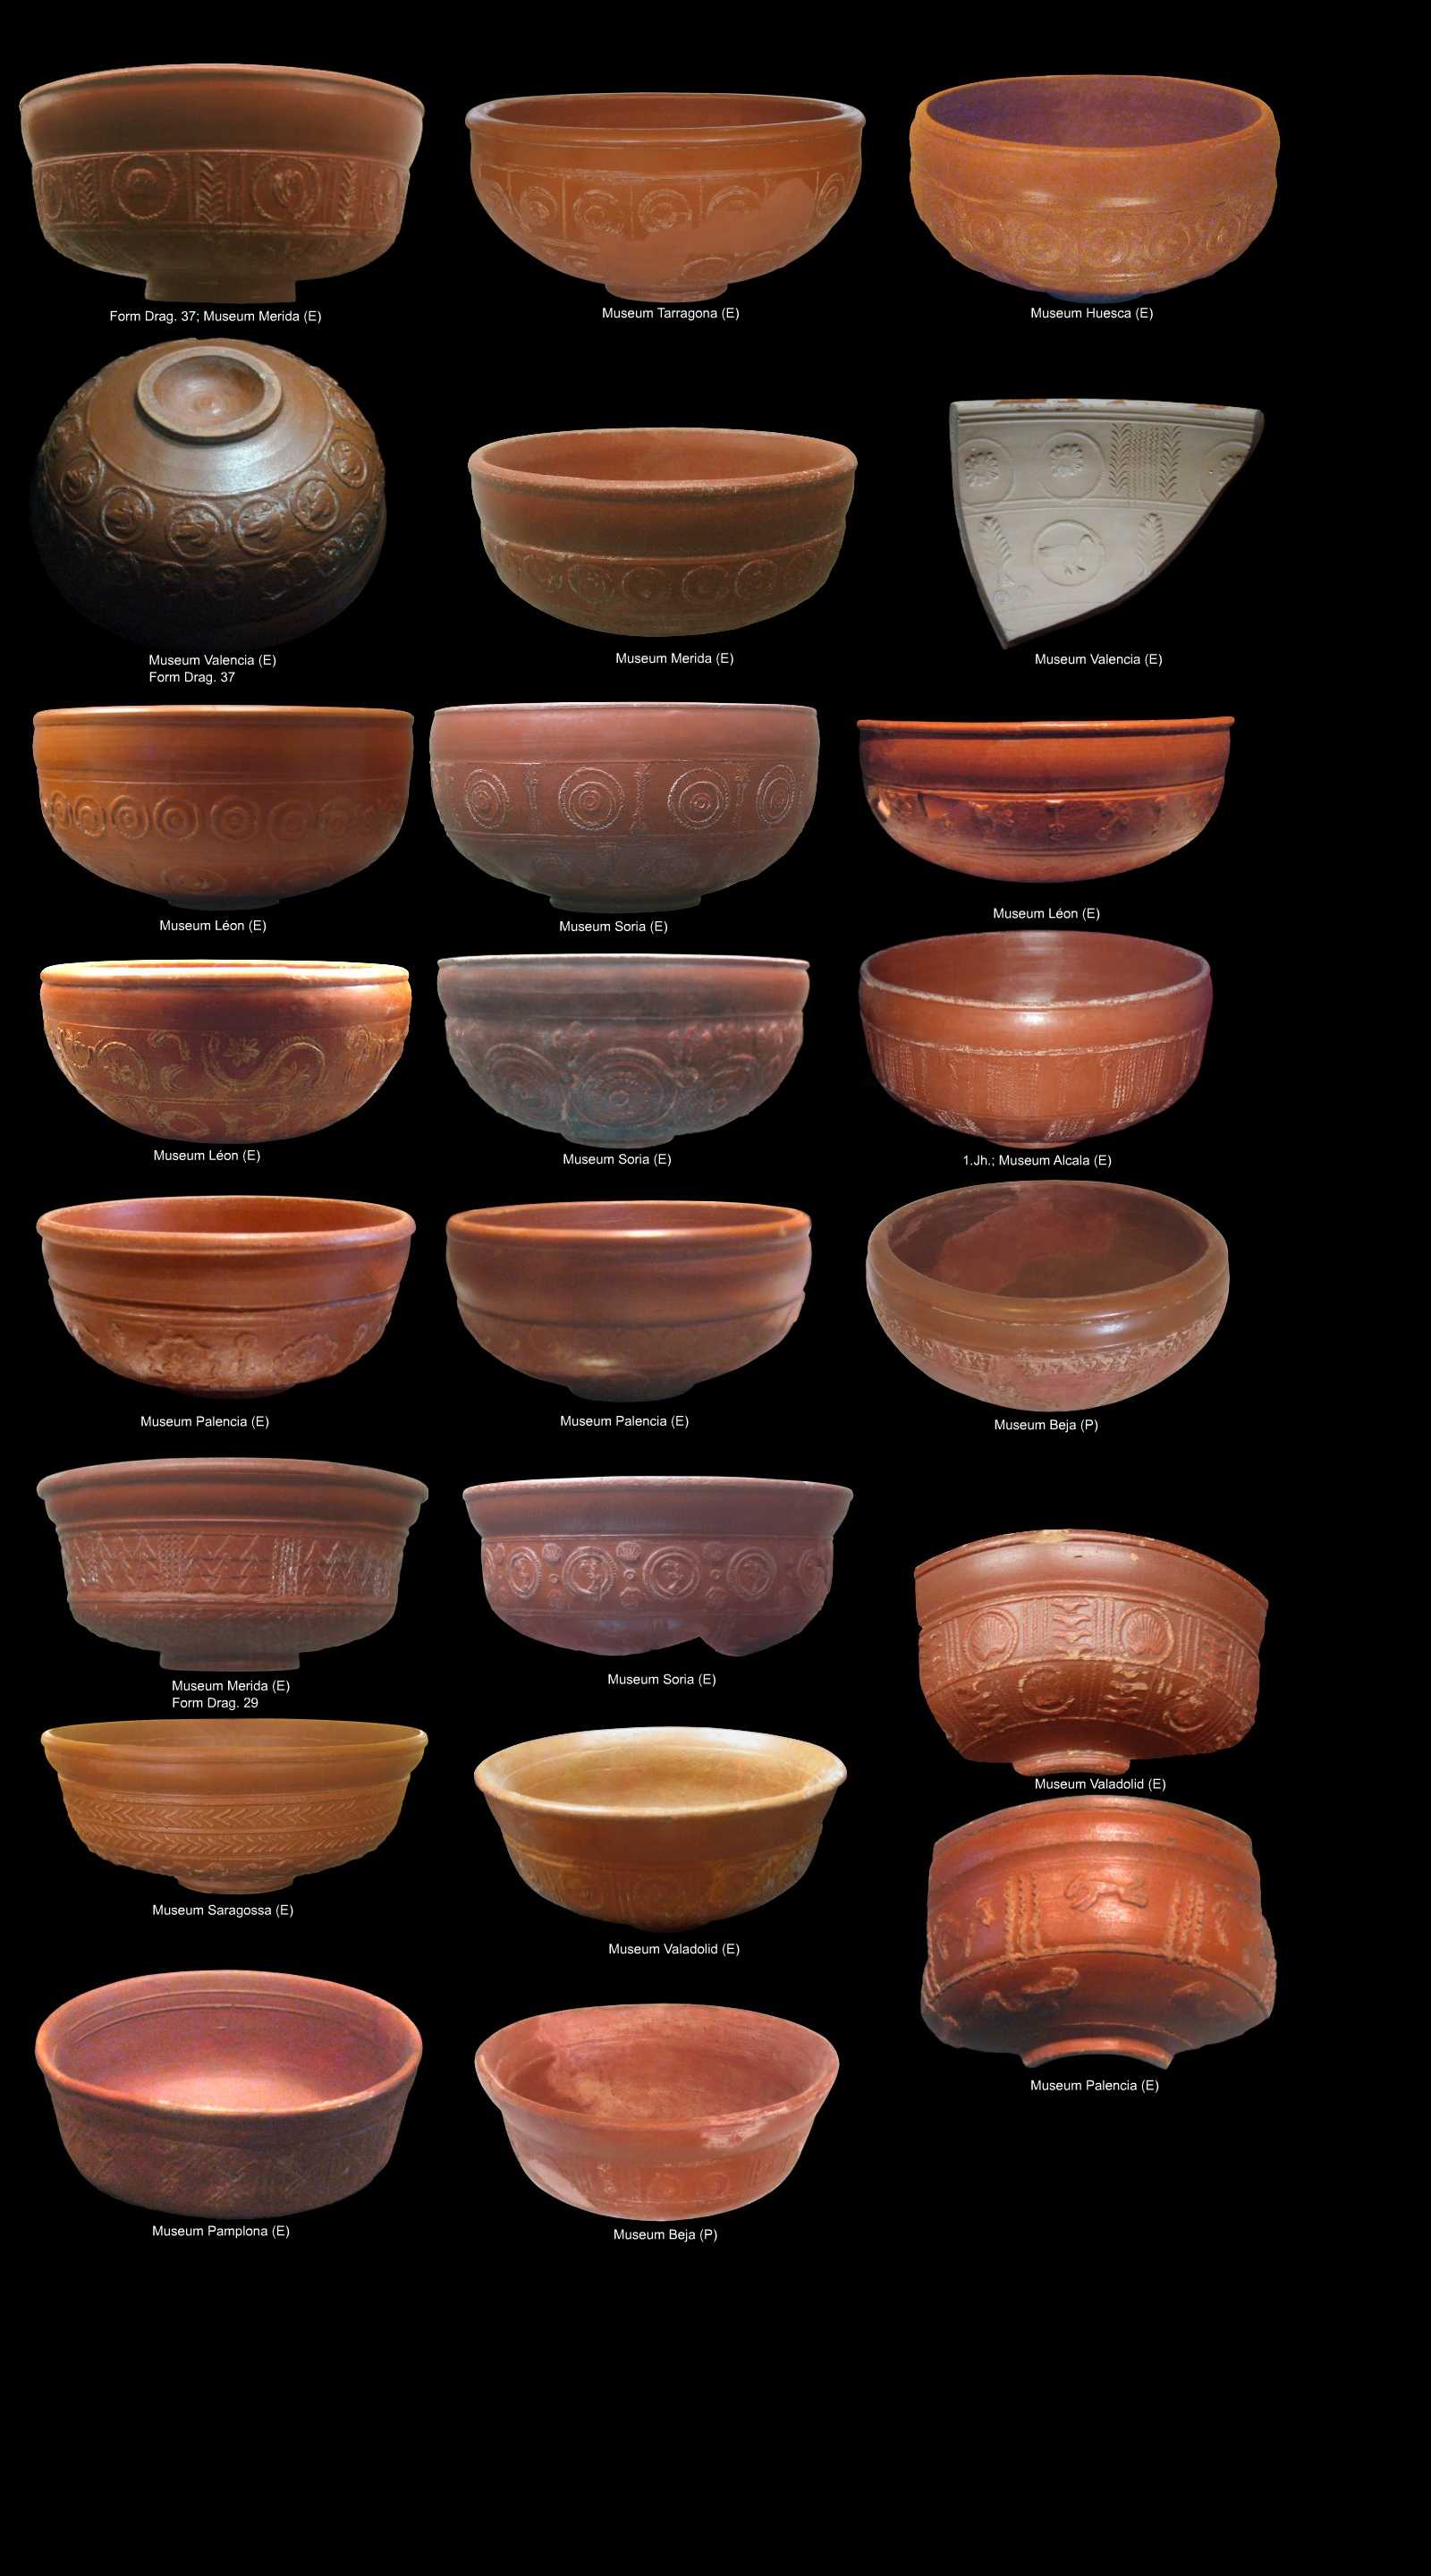 keramikformgetoepfertspanien